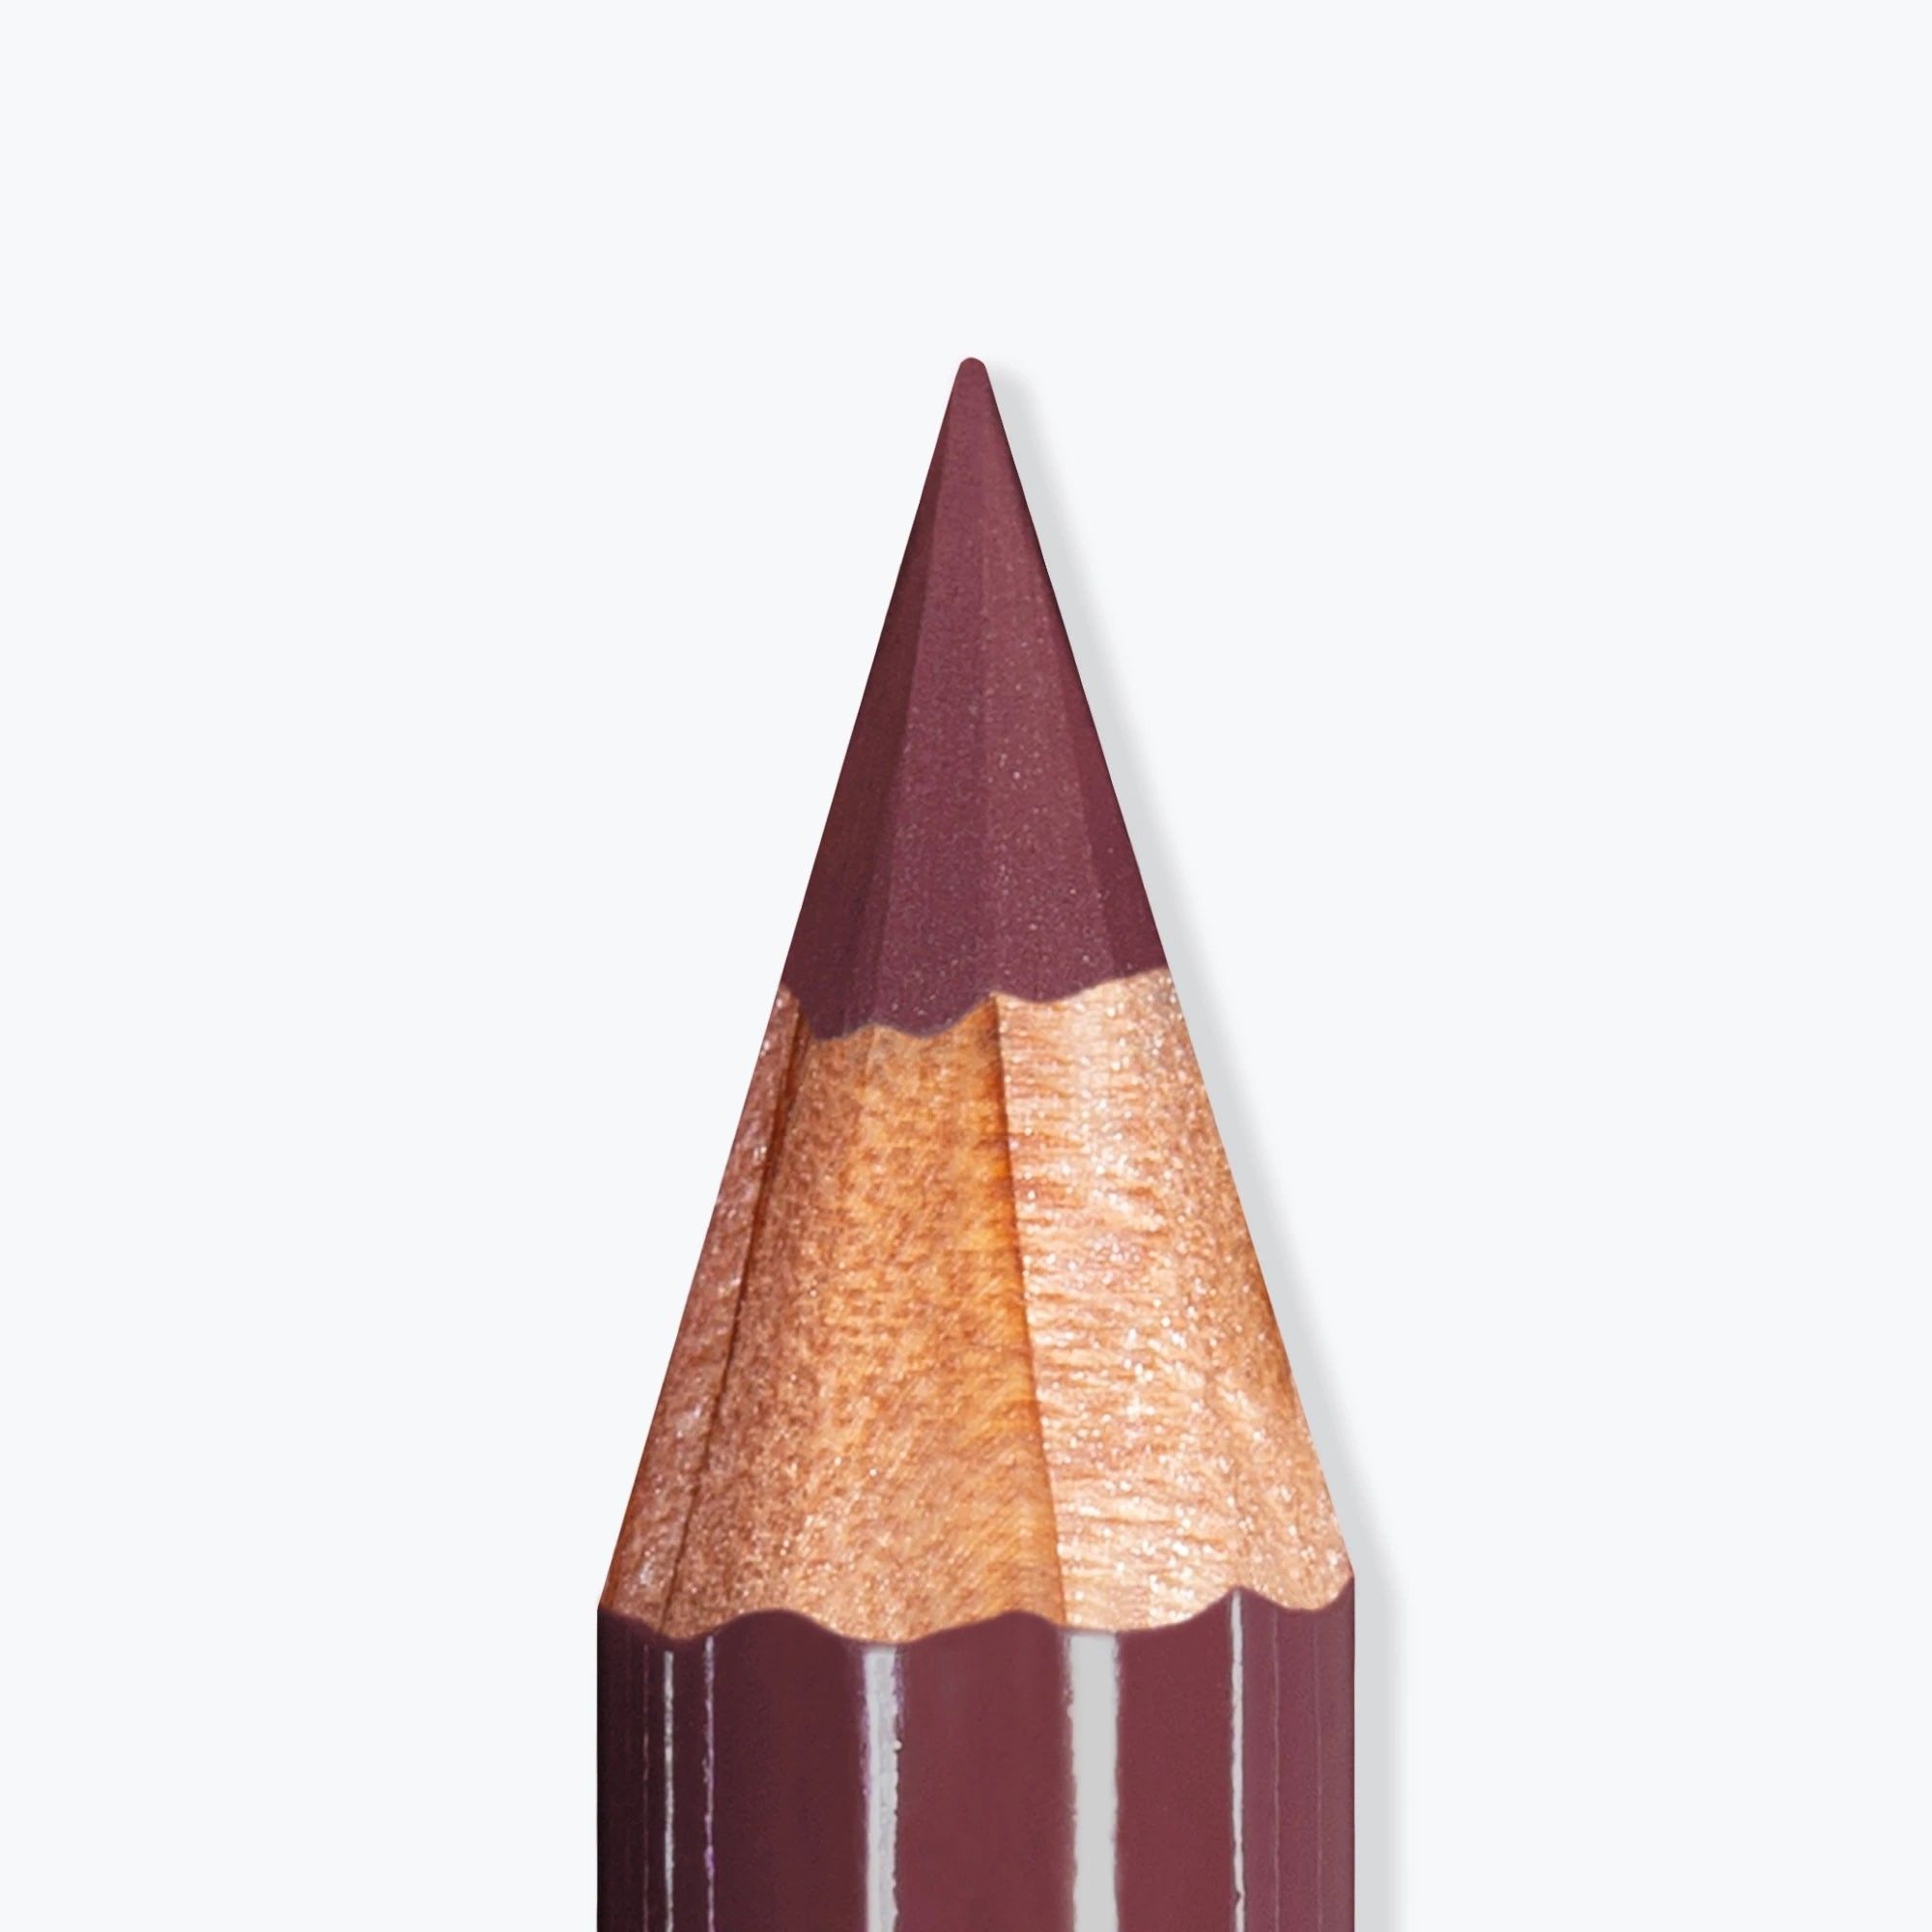 Artist Lips - Lip Pencil